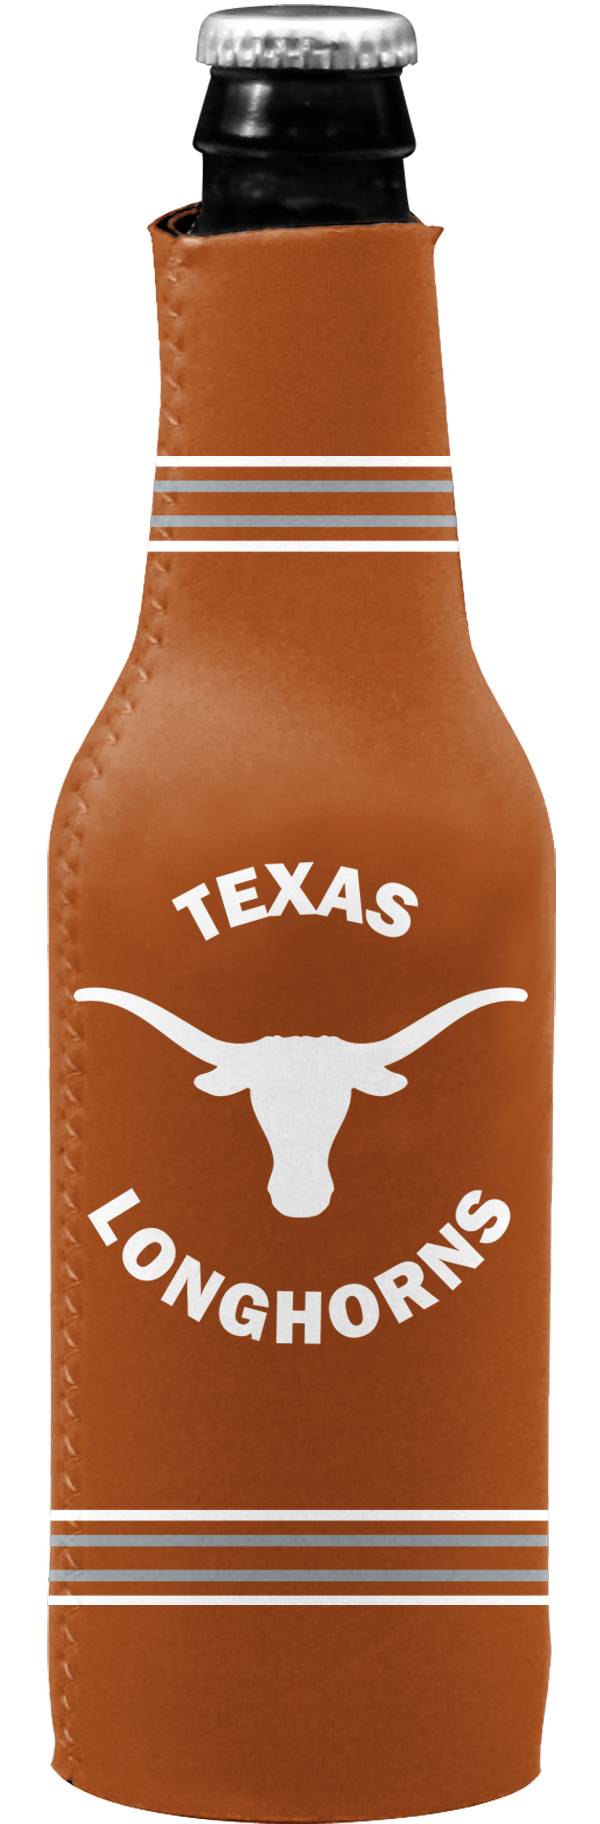 Texas Longhorns Bottle Koozie product image